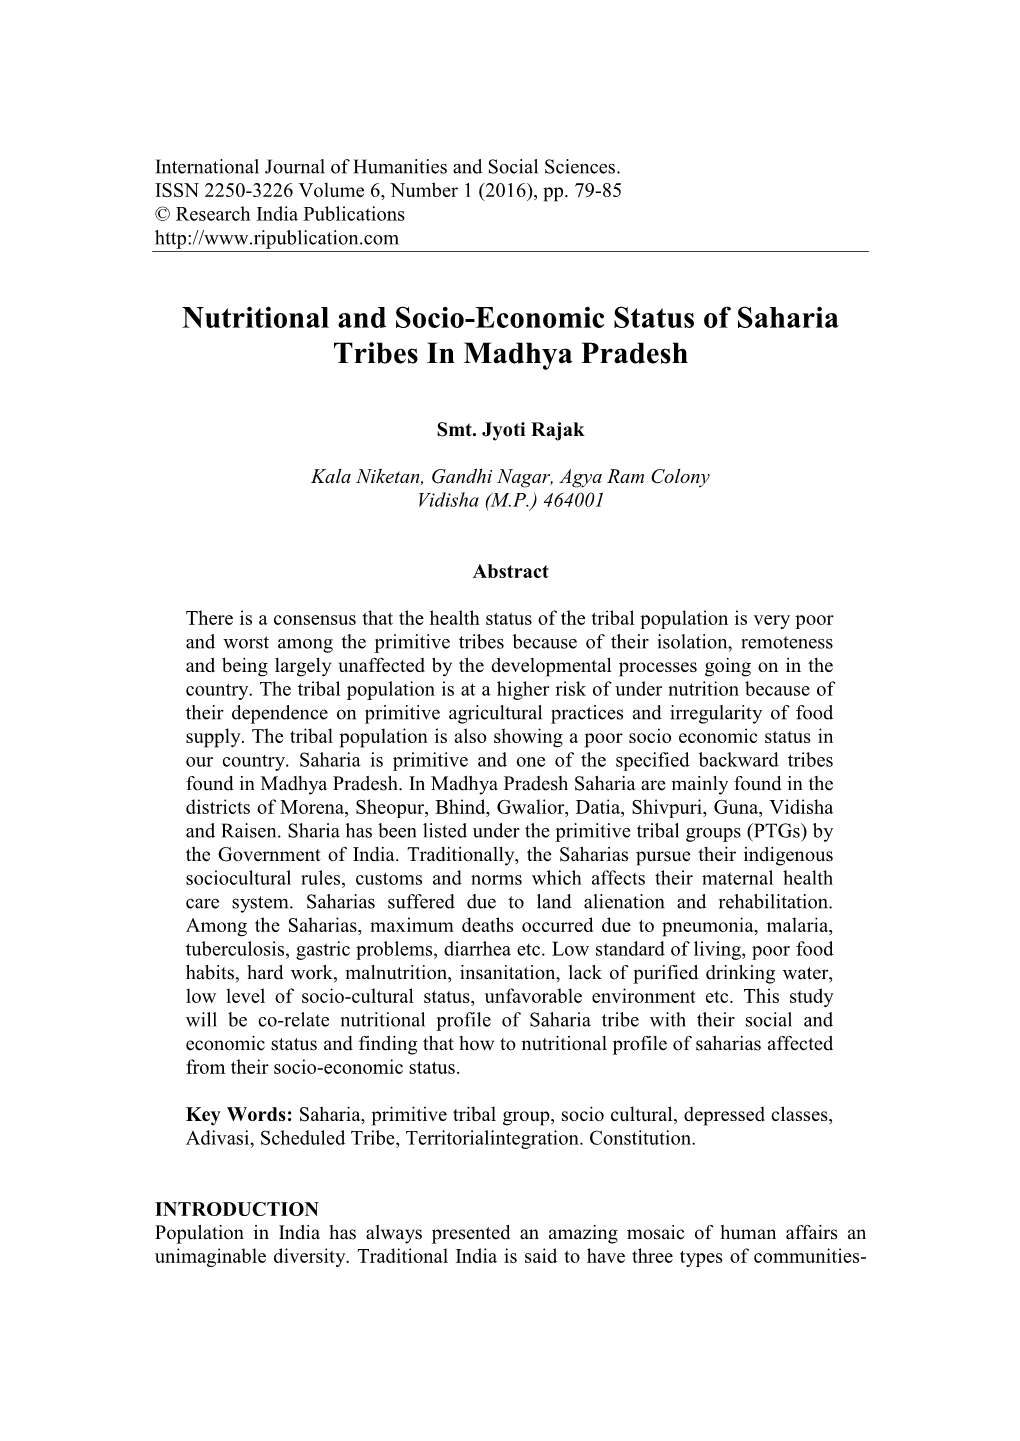 Nutritional and Socio-Economic Status of Saharia Tribes in Madhya Pradesh